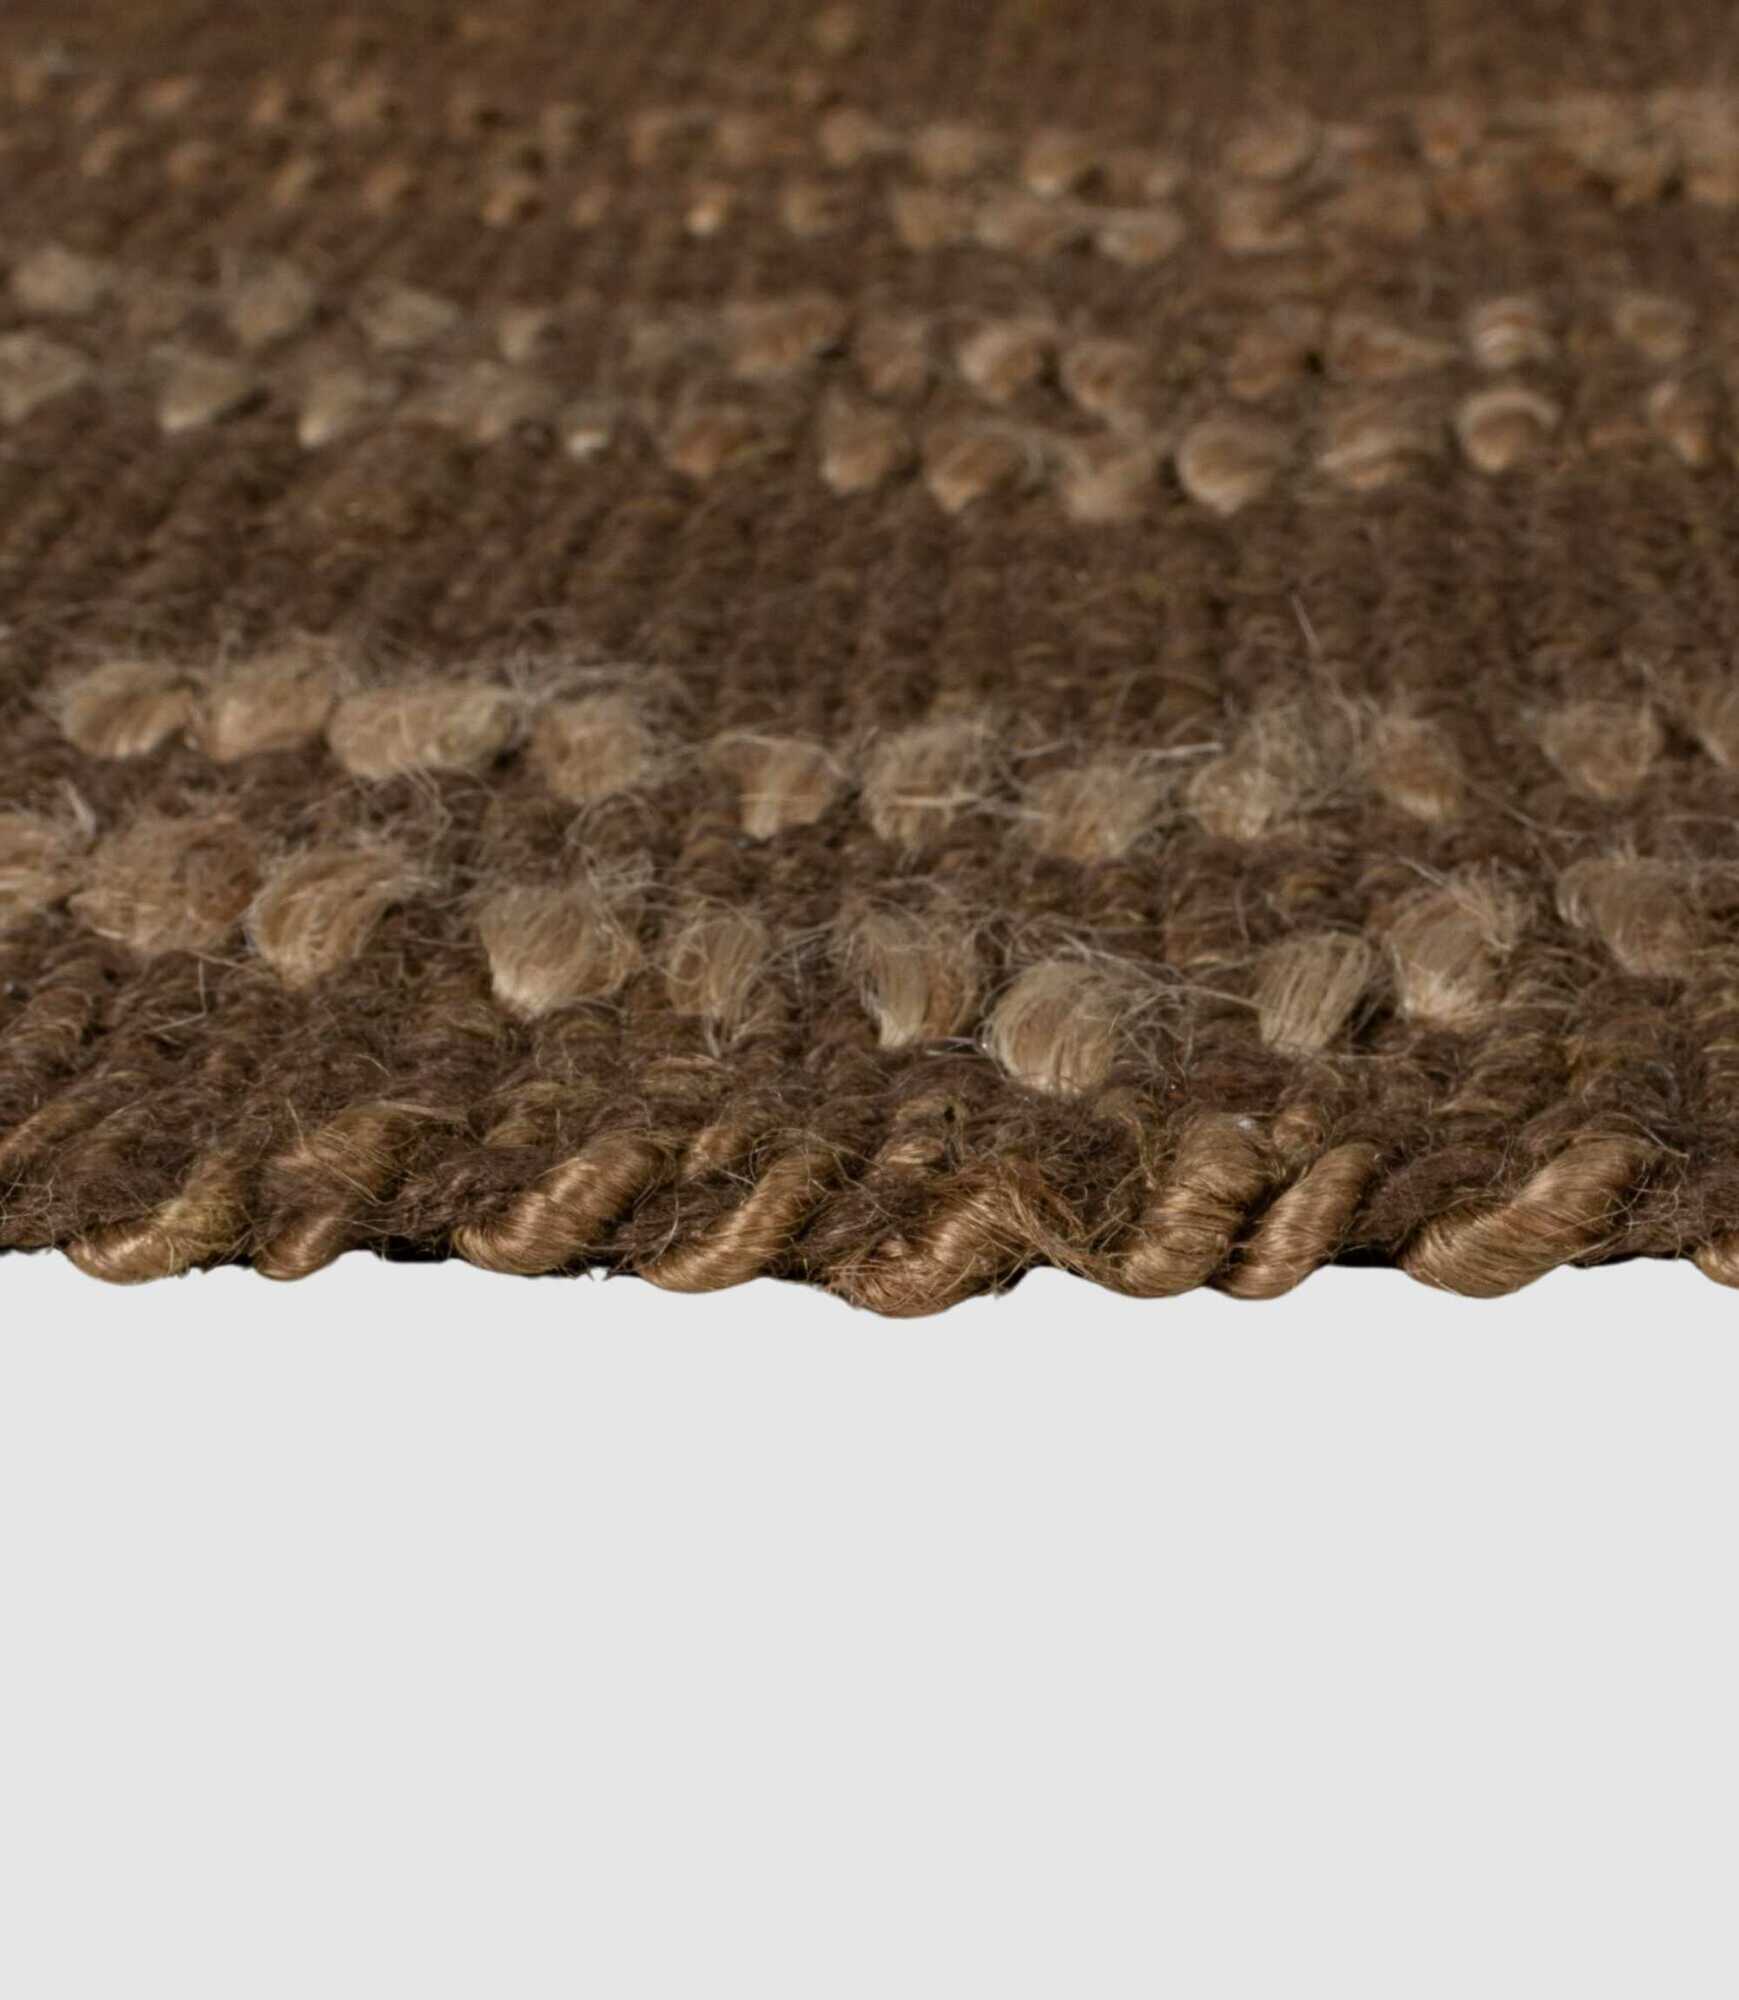 Jute-Teppich Trey Handgewebt Natur 120x170 1